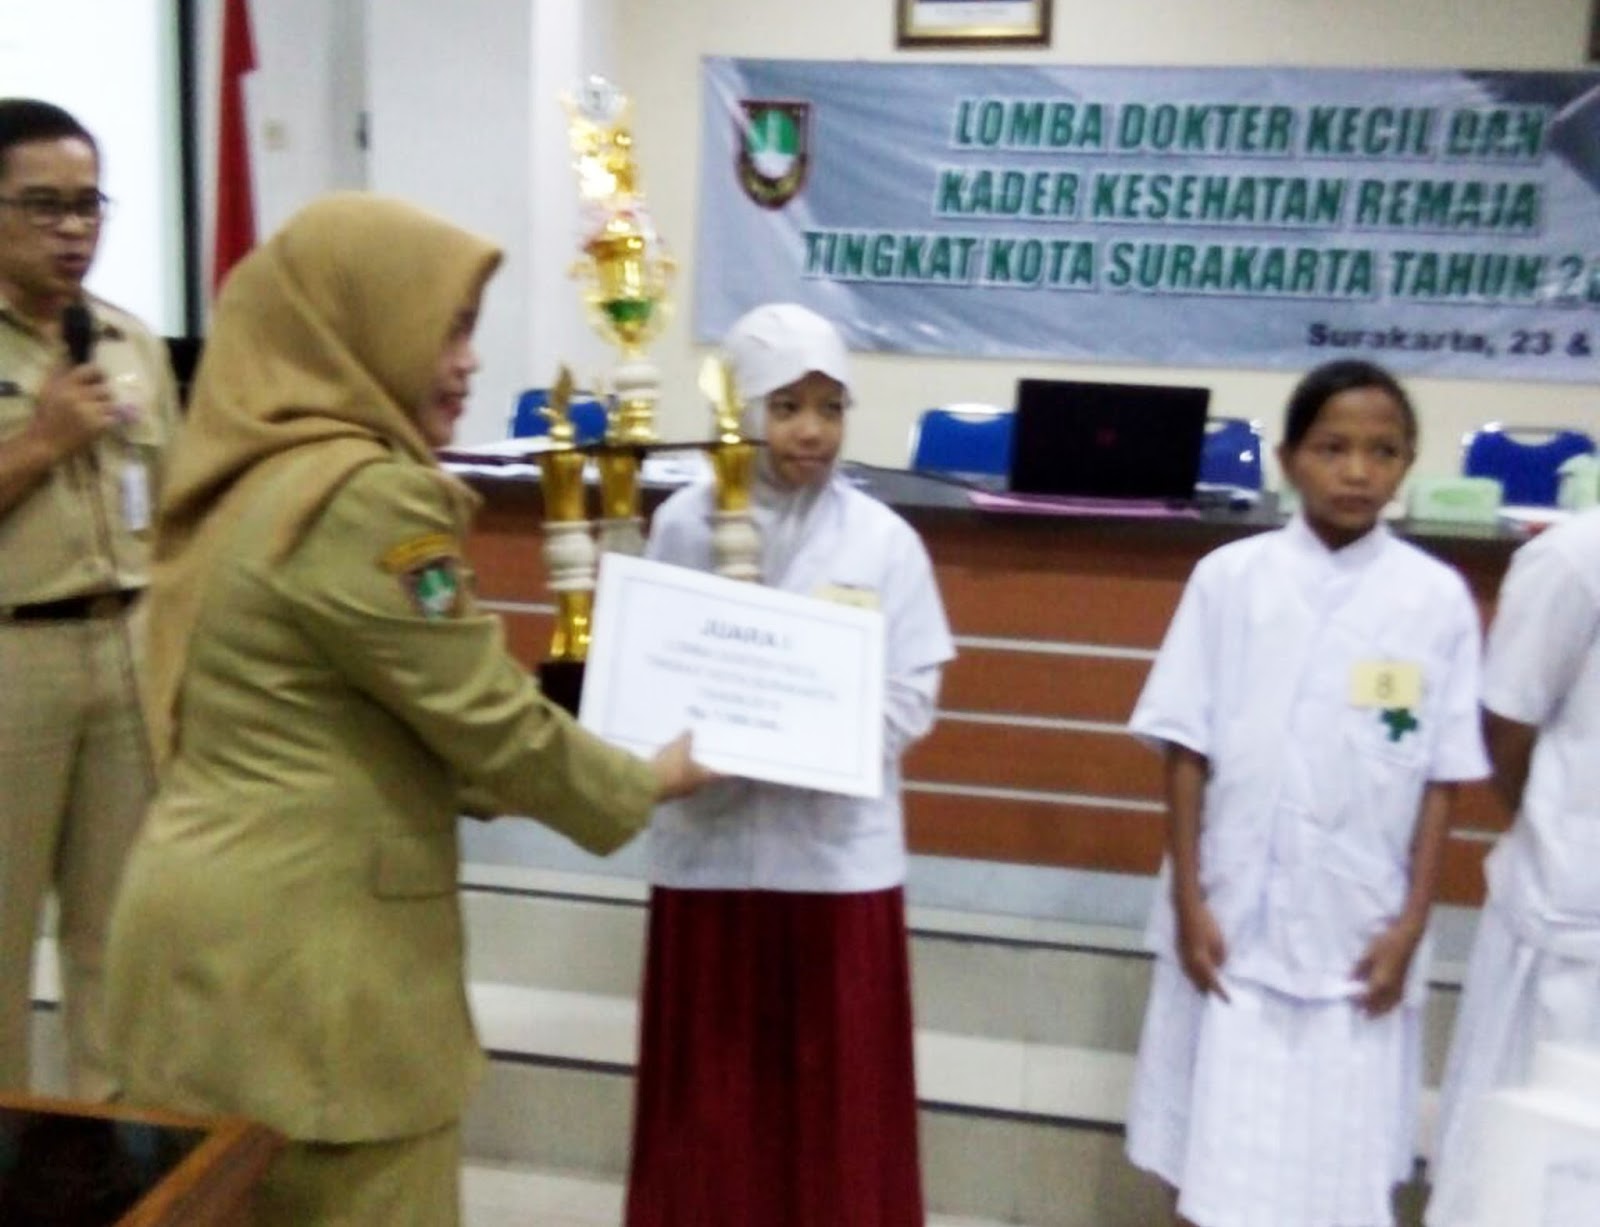 Solo Jawa Tengah Farah Meyliana Artanti siswa kelas 5 A Sekolah Pendidikan Karakter Berbasis TIK SD Muhammadiyah 1 Ketelan Surakarta berhasil menyabet